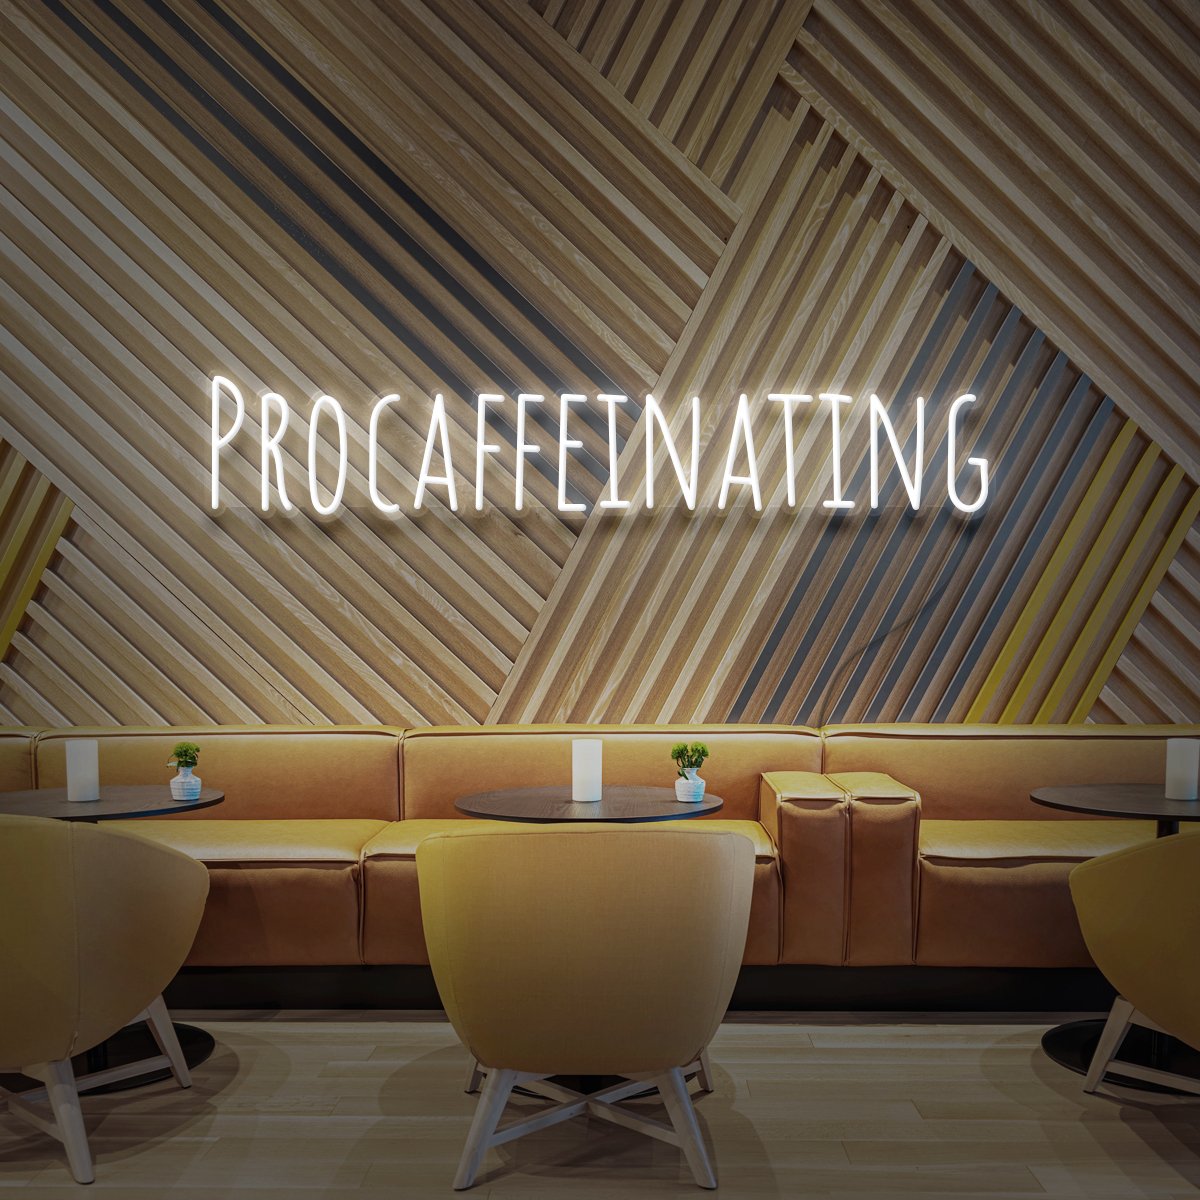 "Procaffeinating" Neon Sign for Cafés